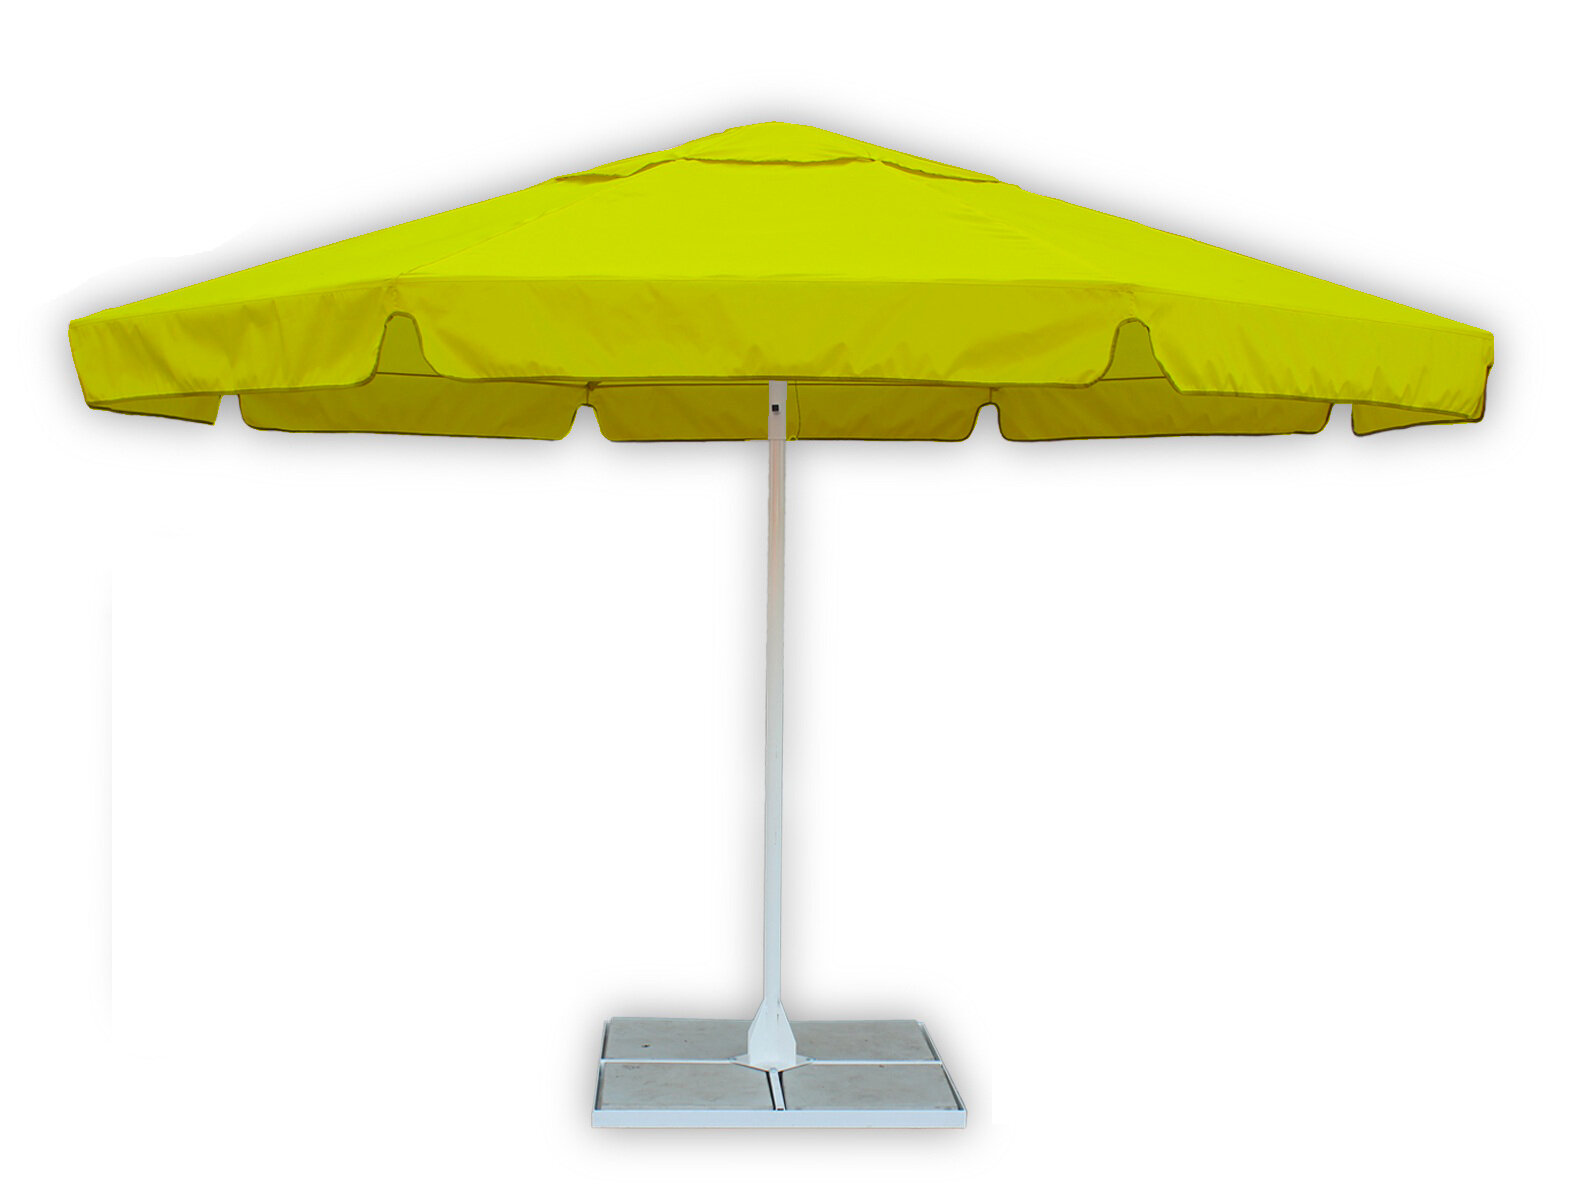 Зонт для кафе круглый 4 метра